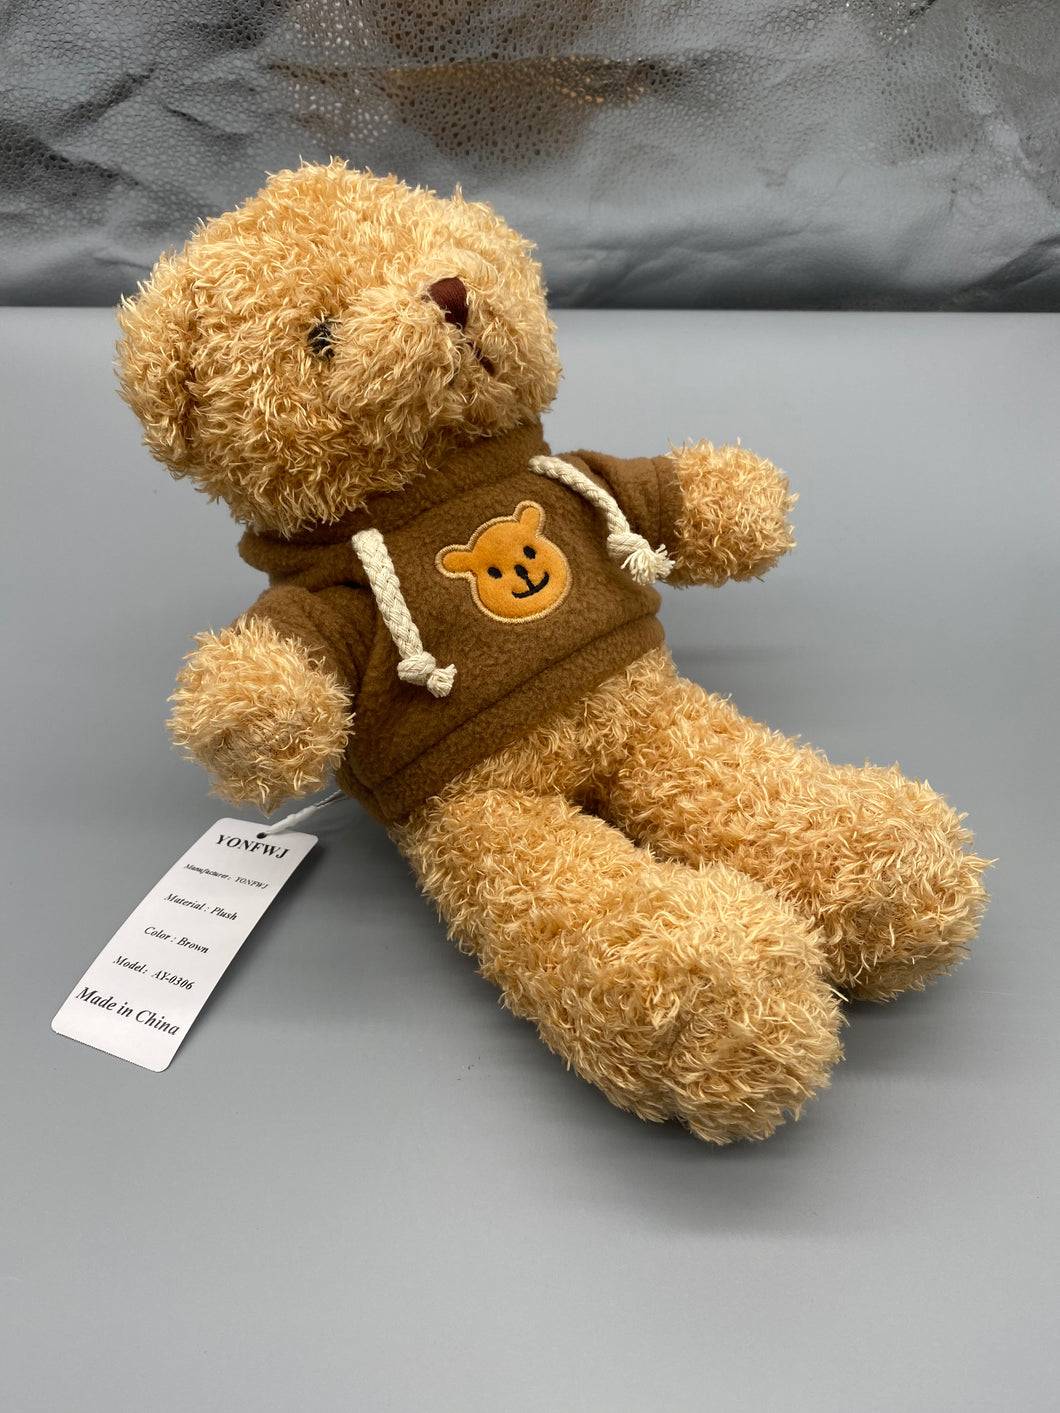 YONFWJ Plush dolls,Teddy Bear Stuffed Animals,Cute Soft Plush Toys ,Teddy Bears Gift for Boys Girls Kids Girlfriends(Brown)